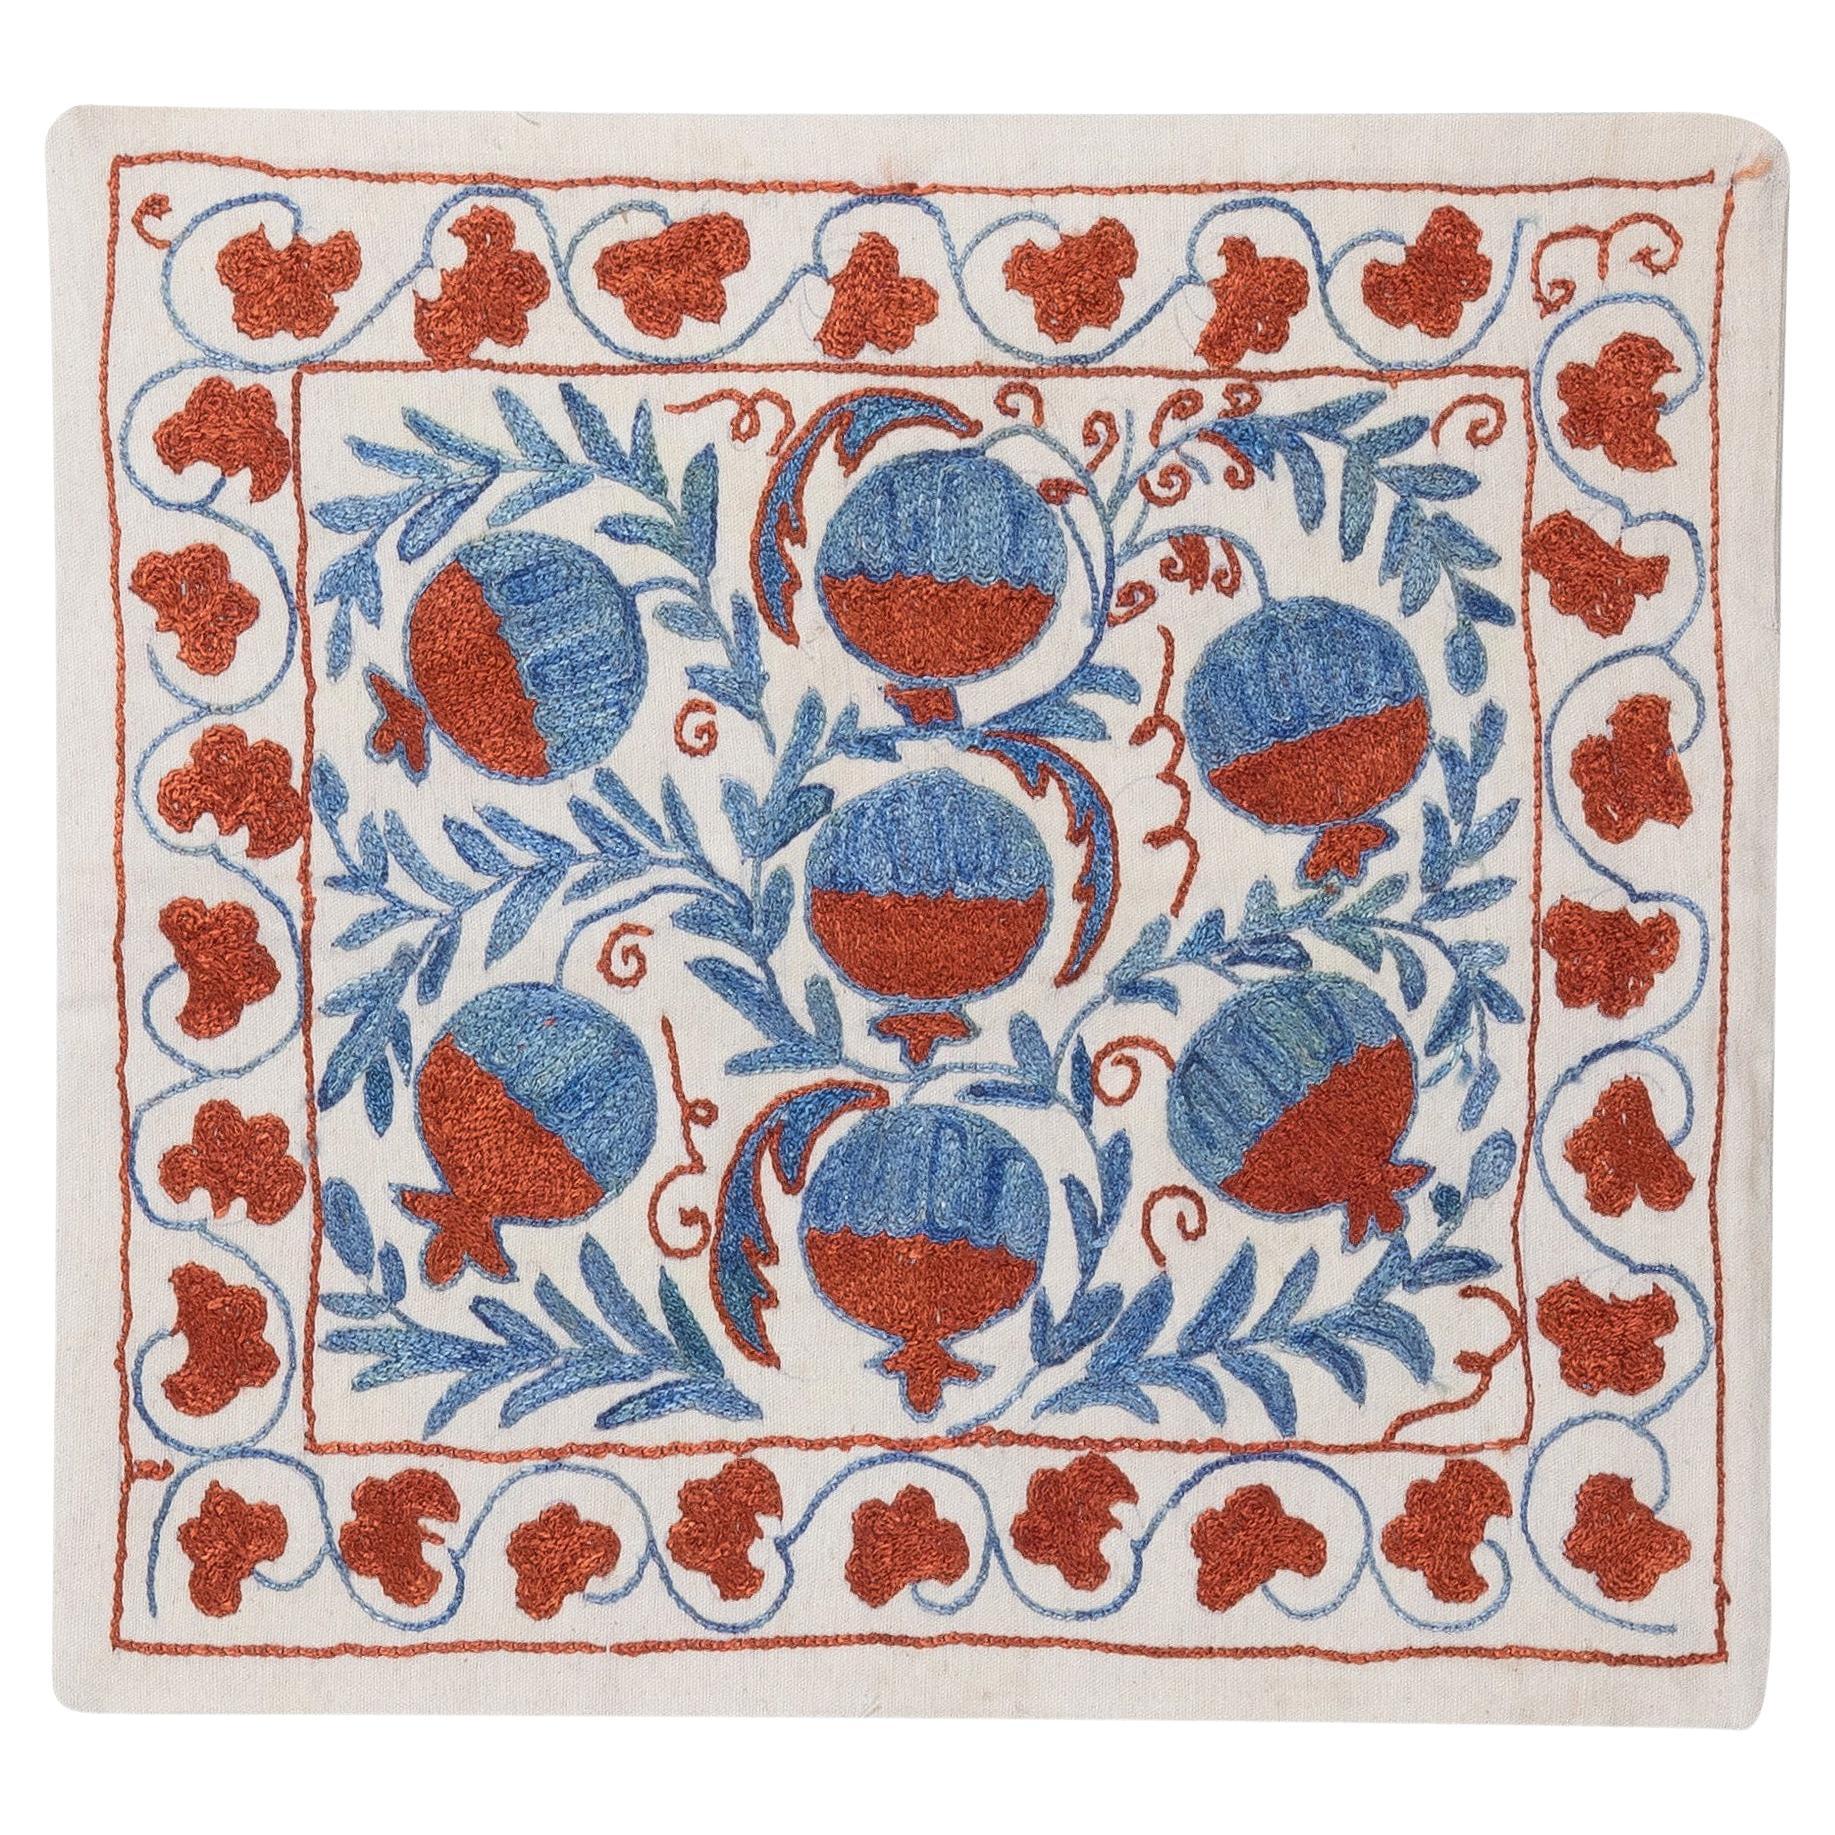 16"x17" Silk Embroidery Cushion Cover, Uzbek Throw Pillow Cover, Suzani Sham